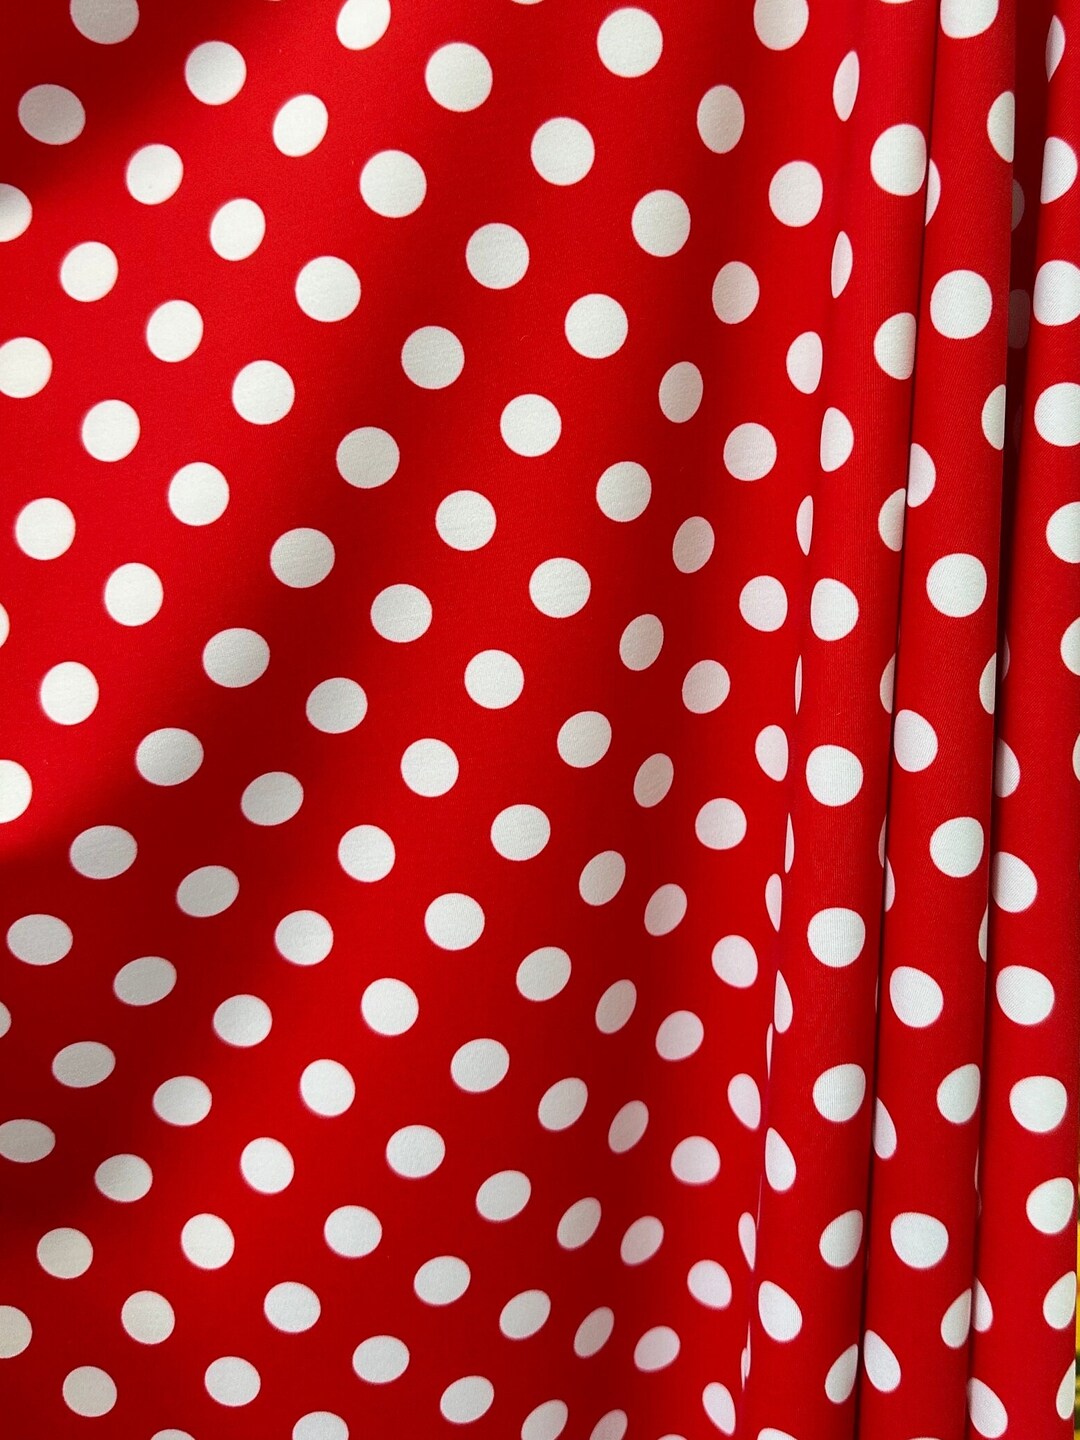 Red and White Polka Dots Fabric Medium Size Dots Nylon Spandex 4 Way ...